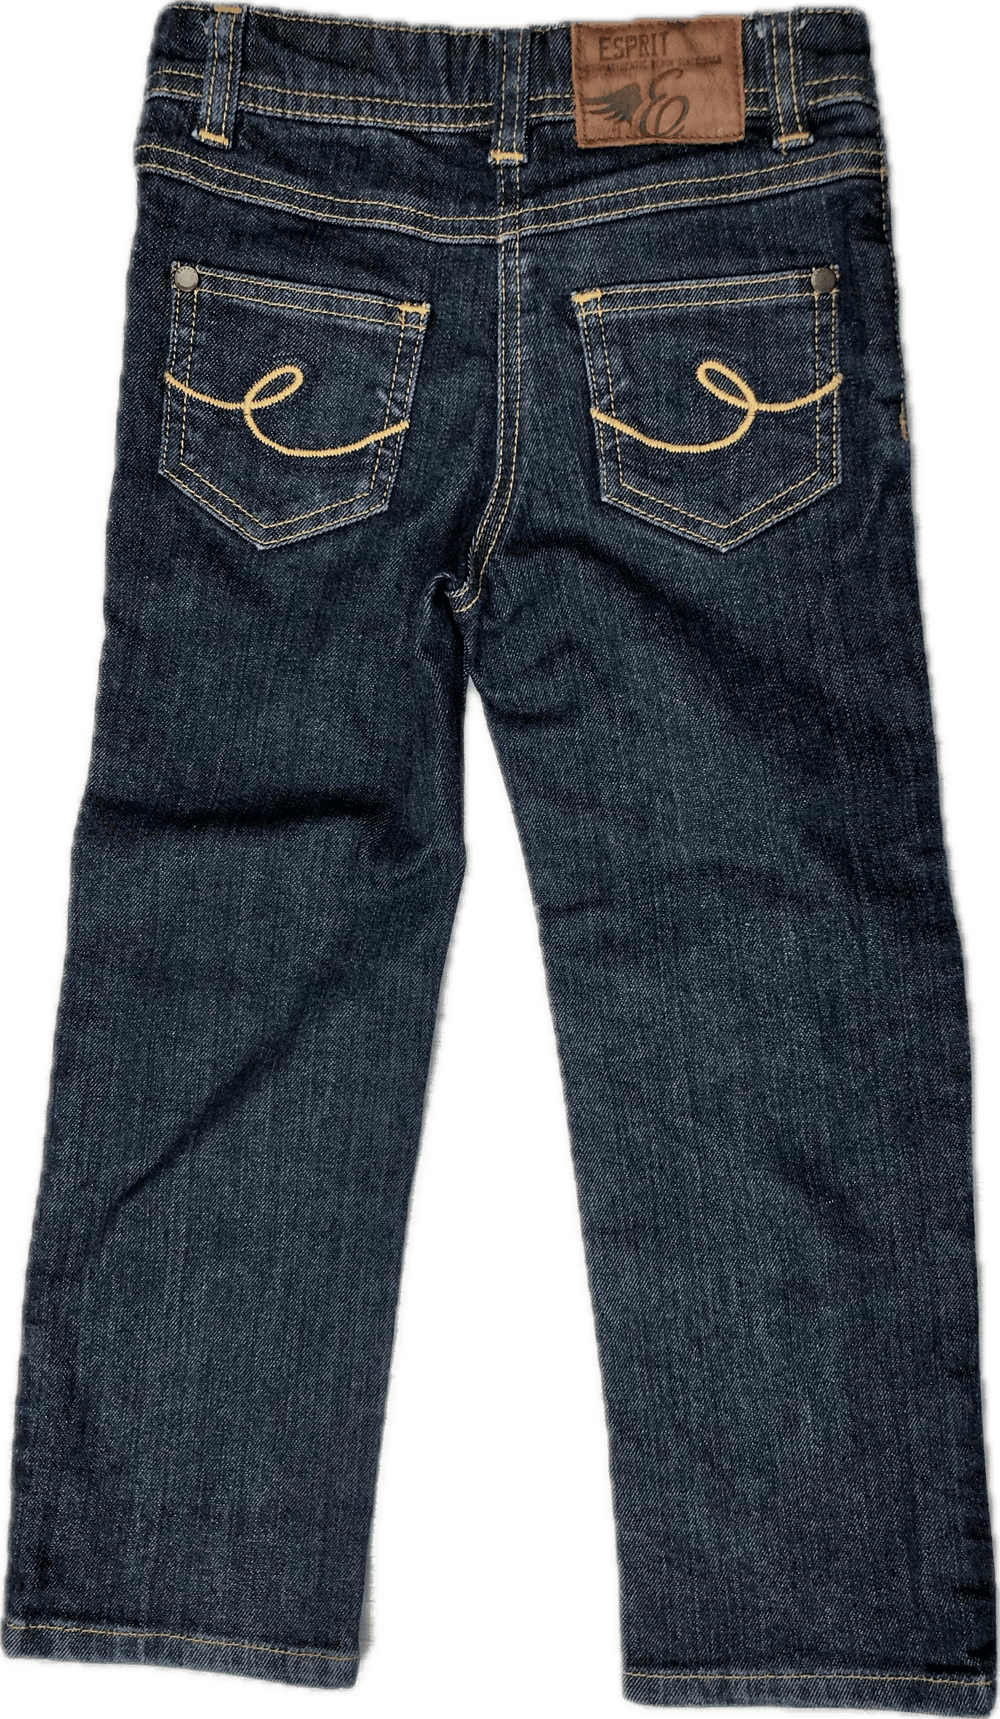 Esprit Slim Straight Kids Stretch Denim Jeans - Size 3Y - Jean Pool